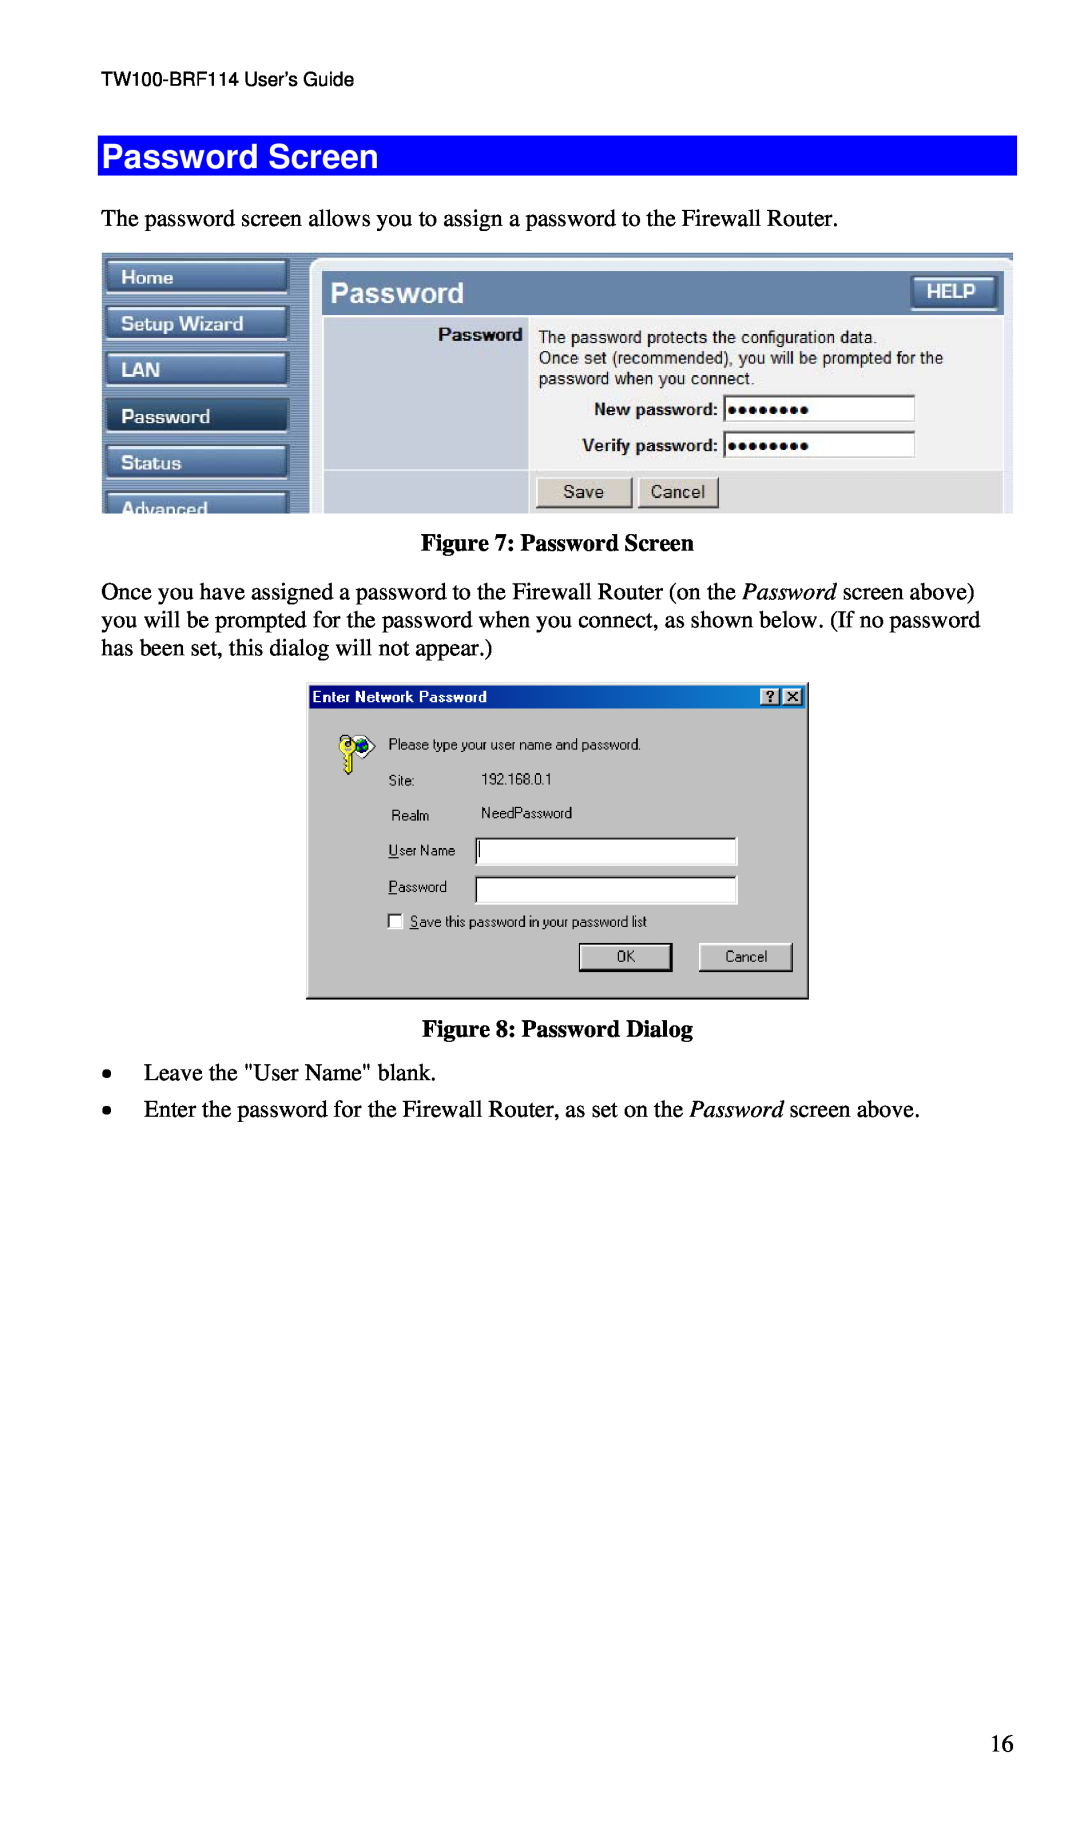 TRENDnet BRF114 manual Password Screen, Password Dialog 